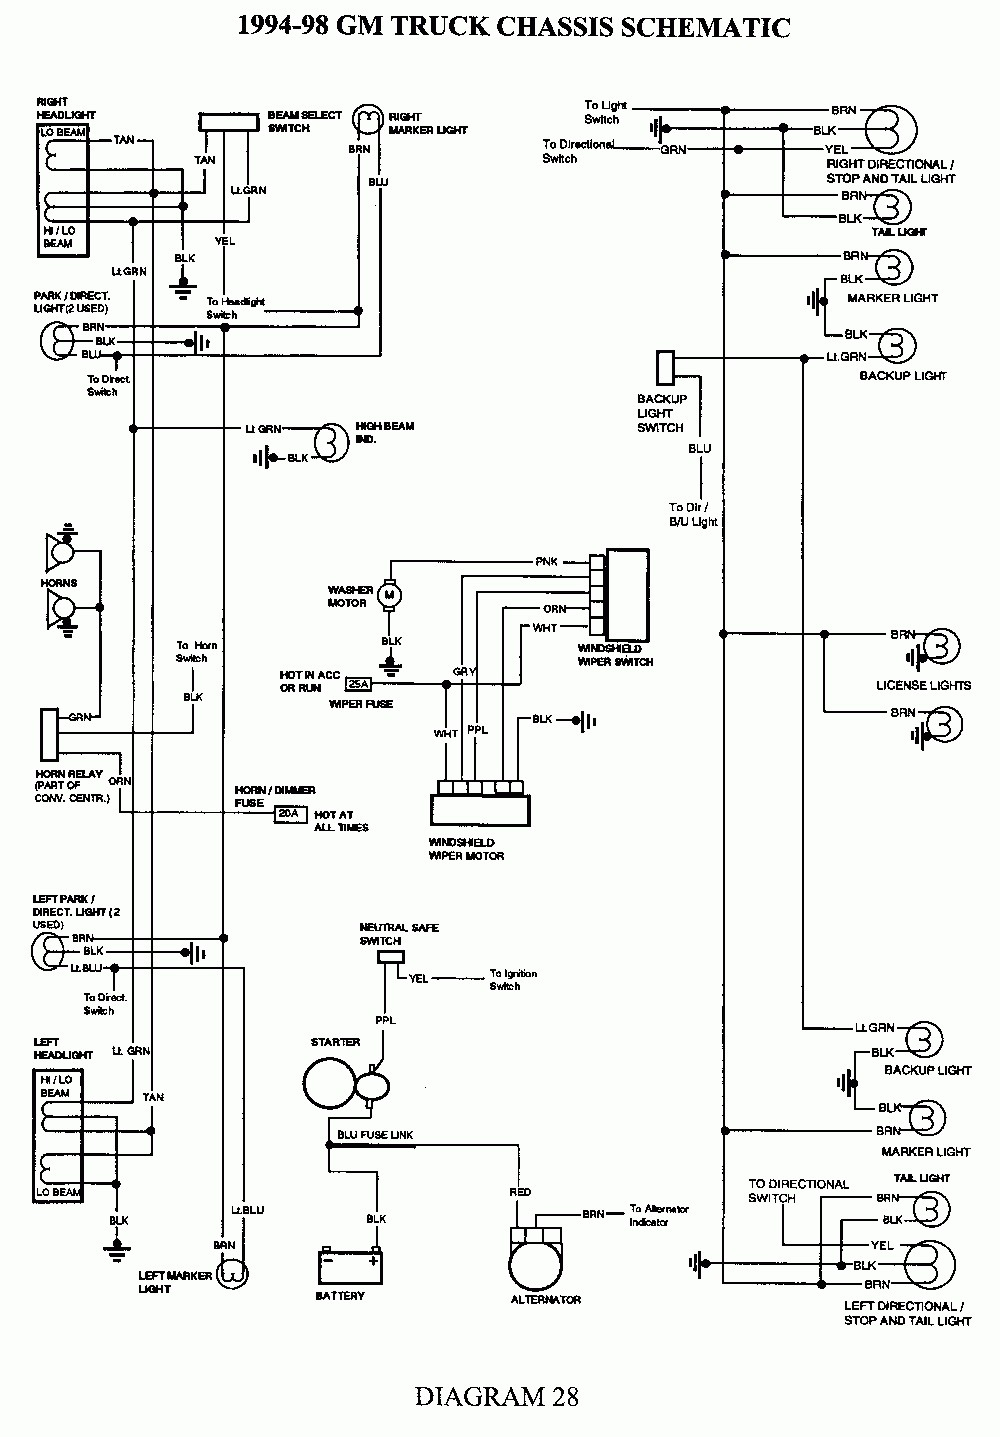 Fuel Pump Diagram Gmc Truck Electrical Wiring Diagrams Fuel Pump Wiring Diagrams Show